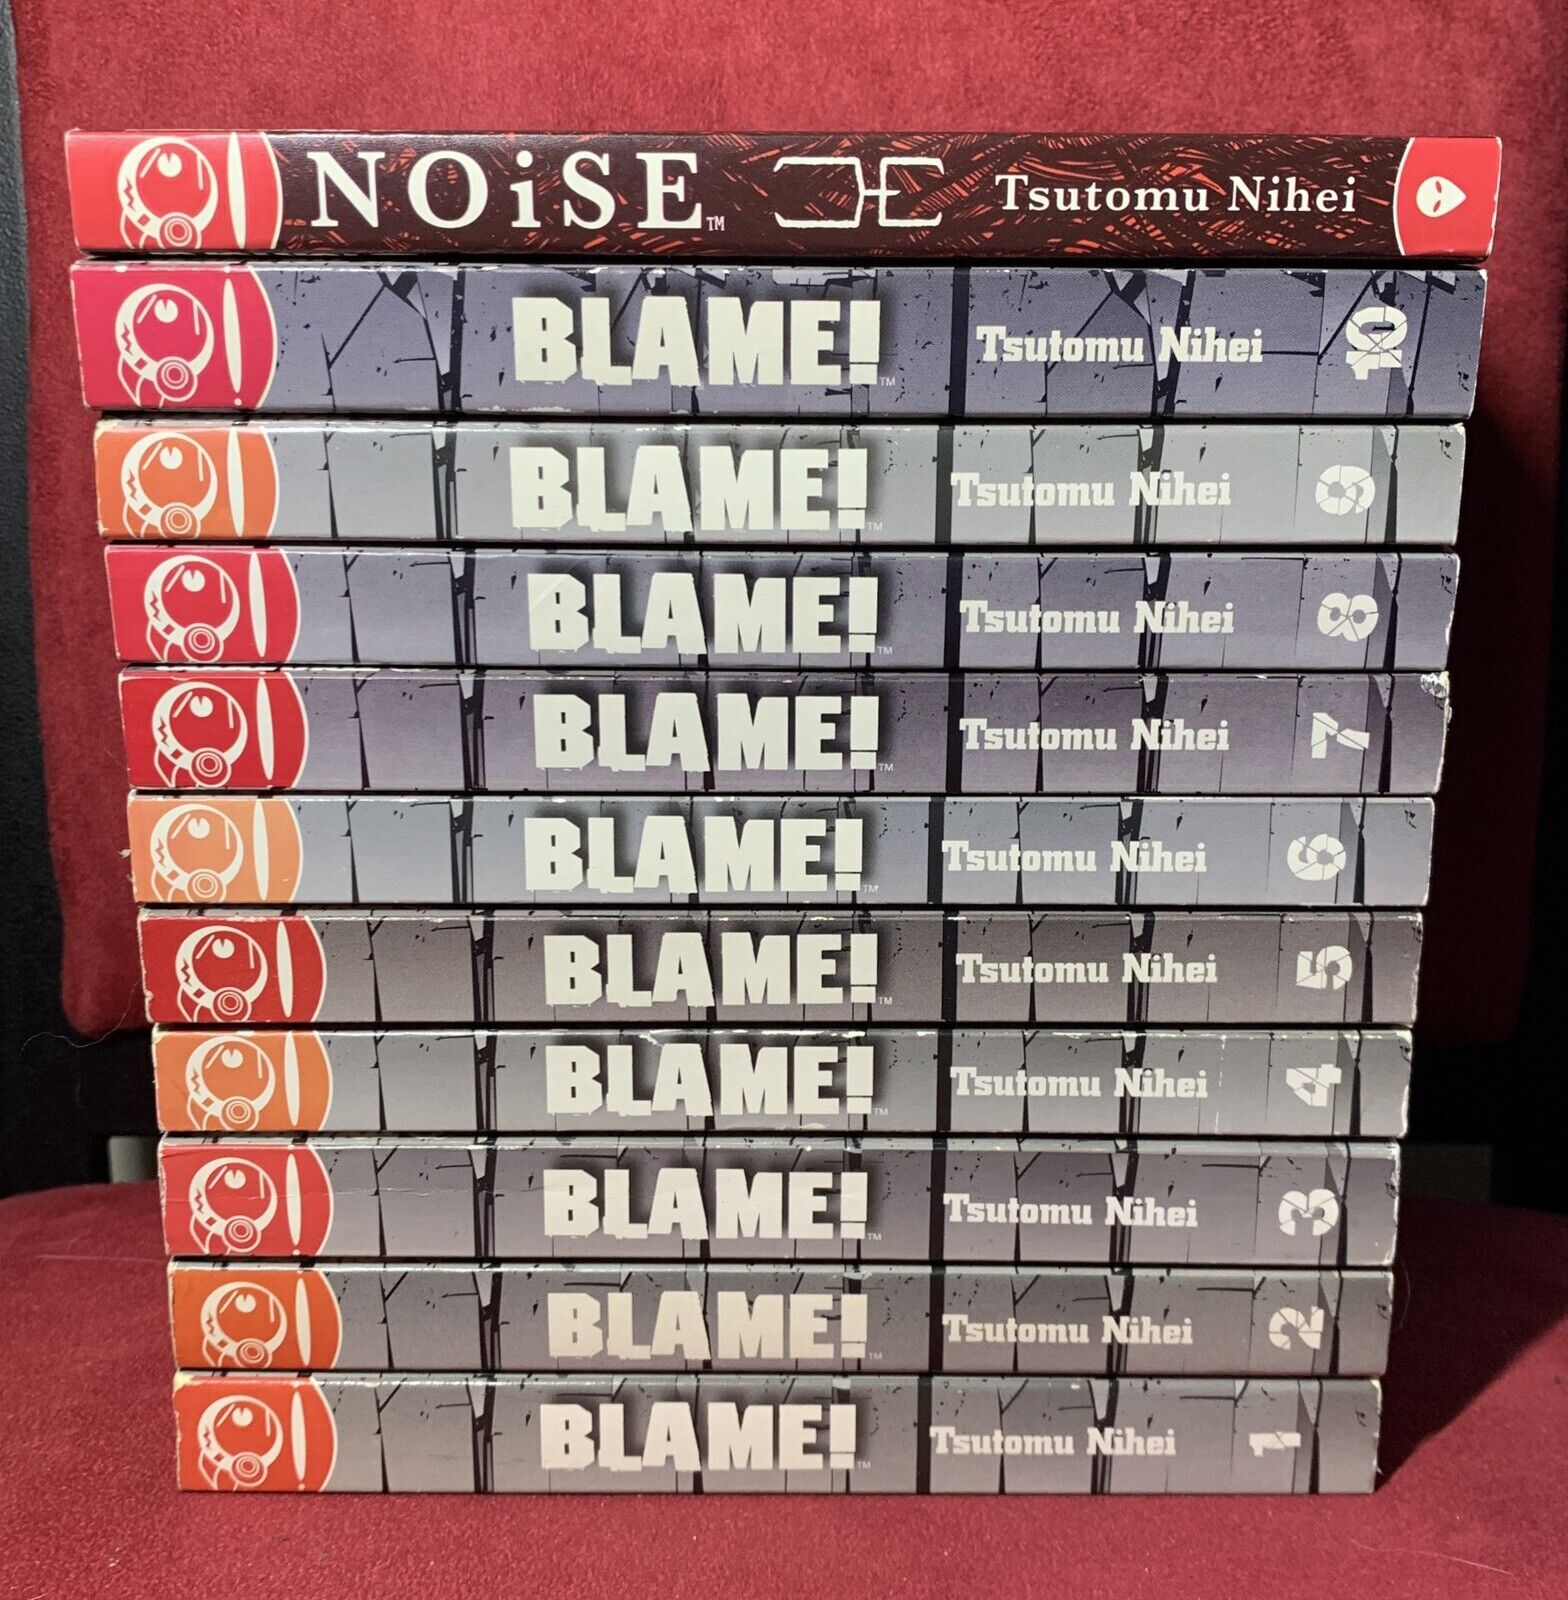 BLAME Vols. 1-10 + NOiSE (Complete Series) by Tsutomu Nihei, English Manga Set